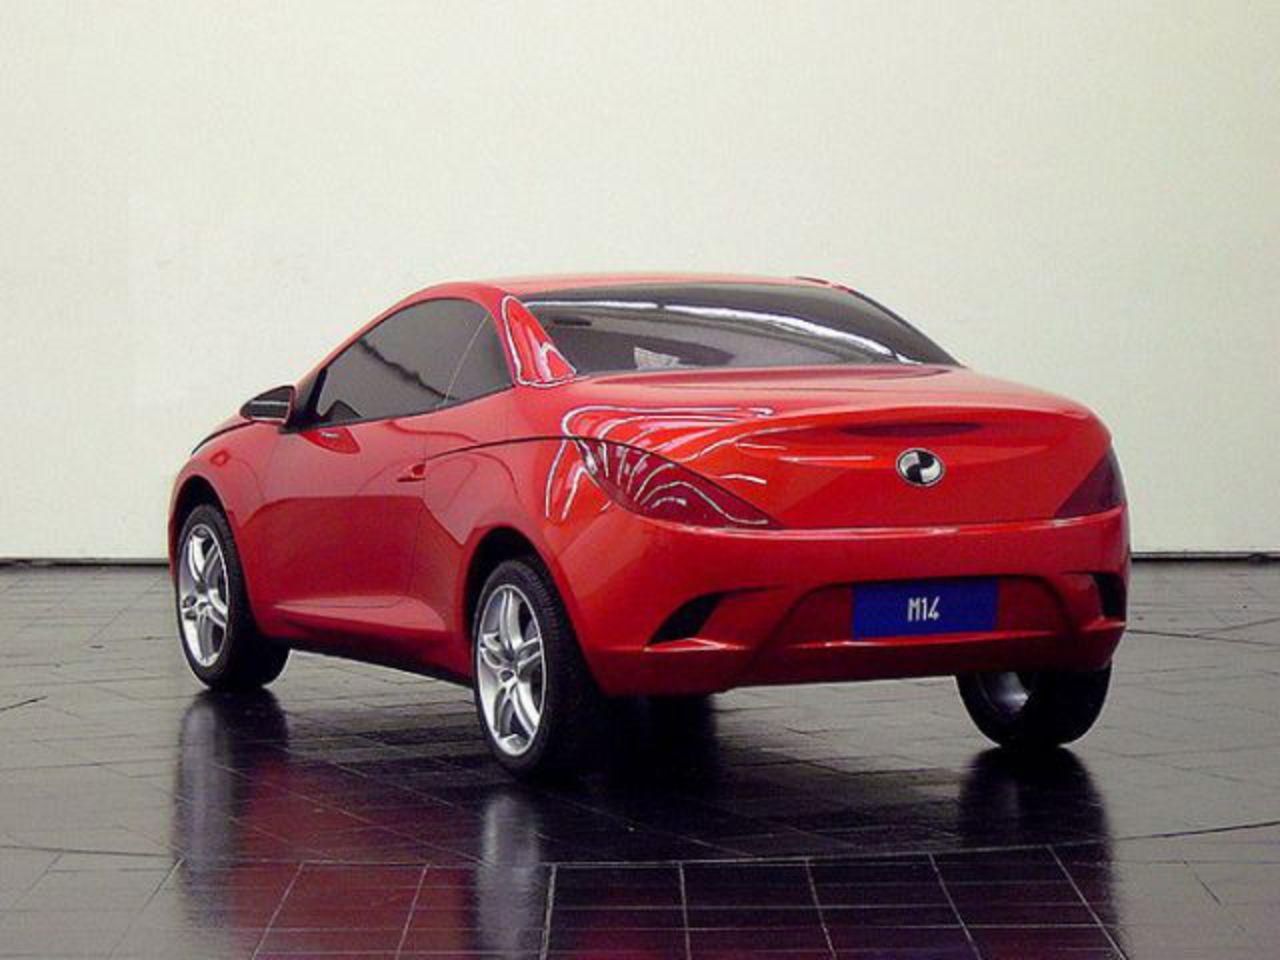 Chery A3CC (M14) - China Car Forums